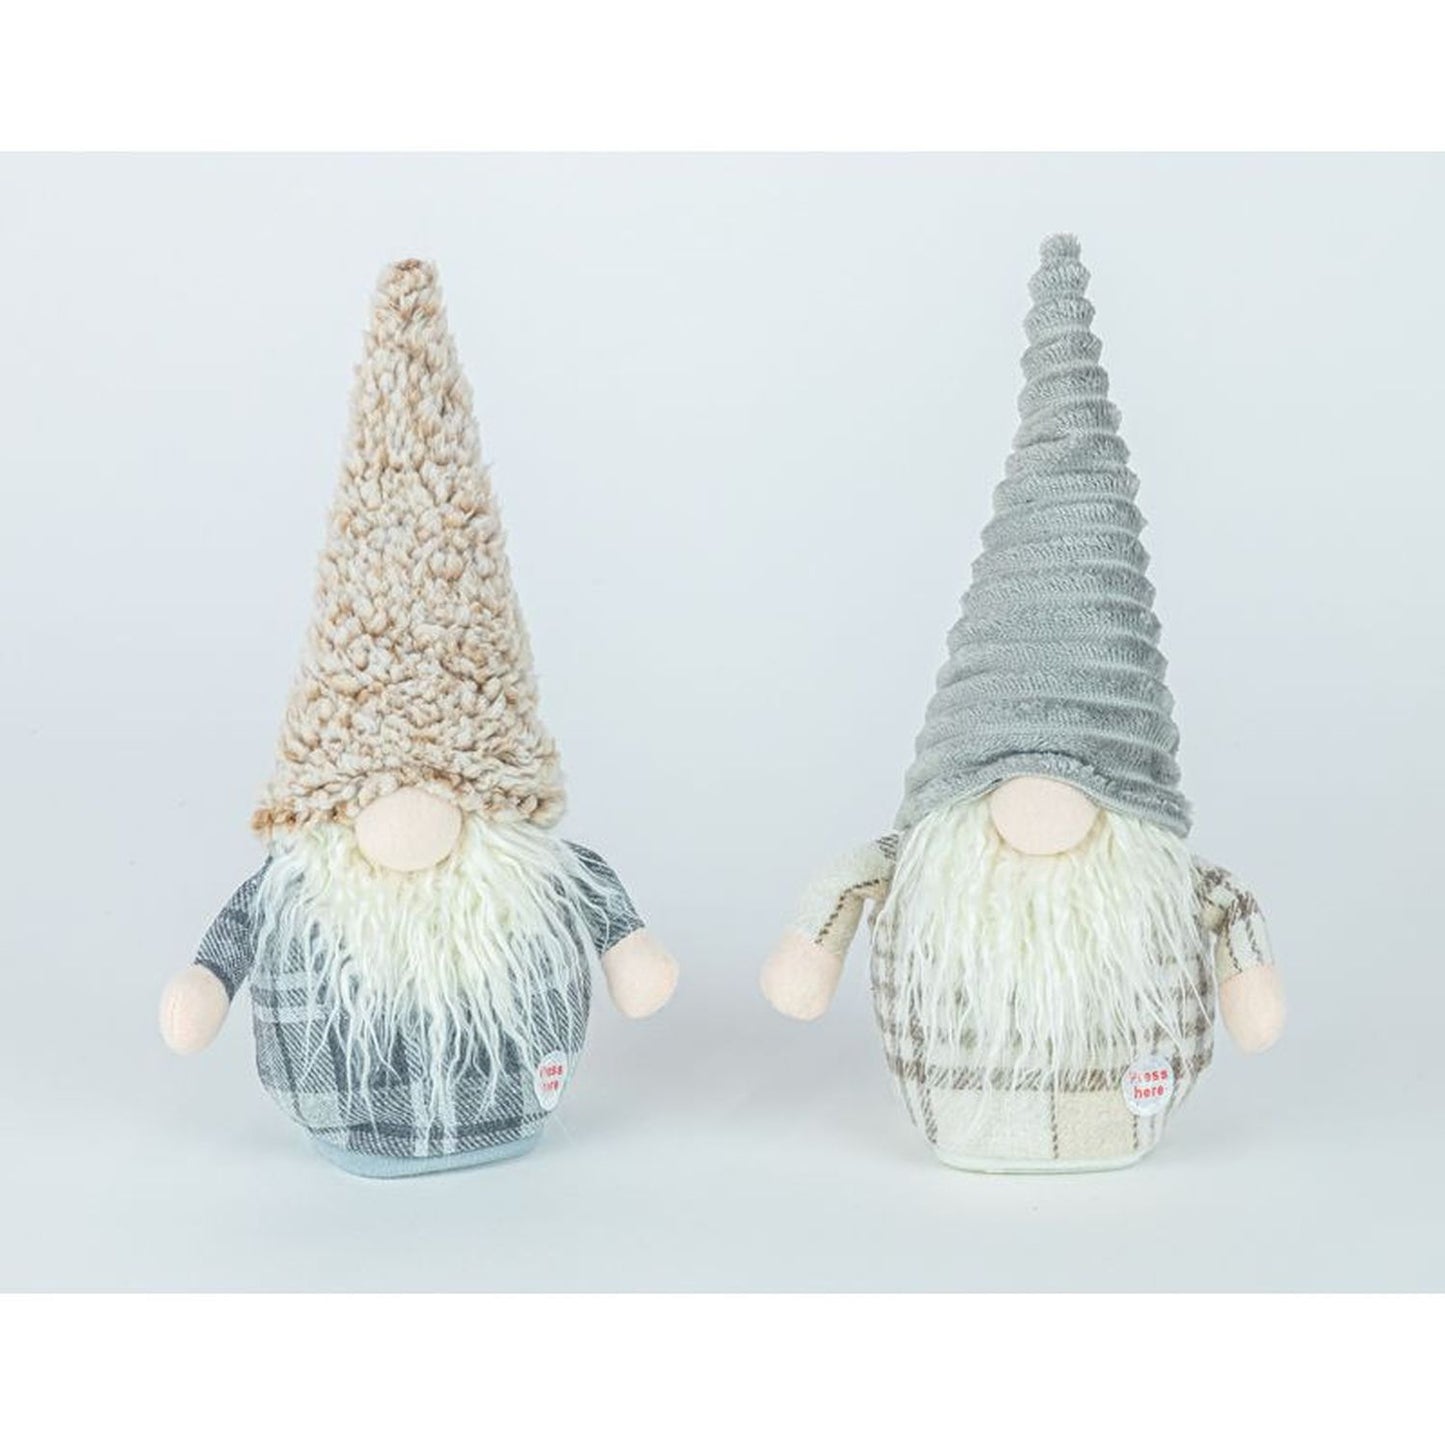 Hanna’s Handiworks Hazel Plaid Merry Wishes Animated Gnome Set Of 2 Assortment